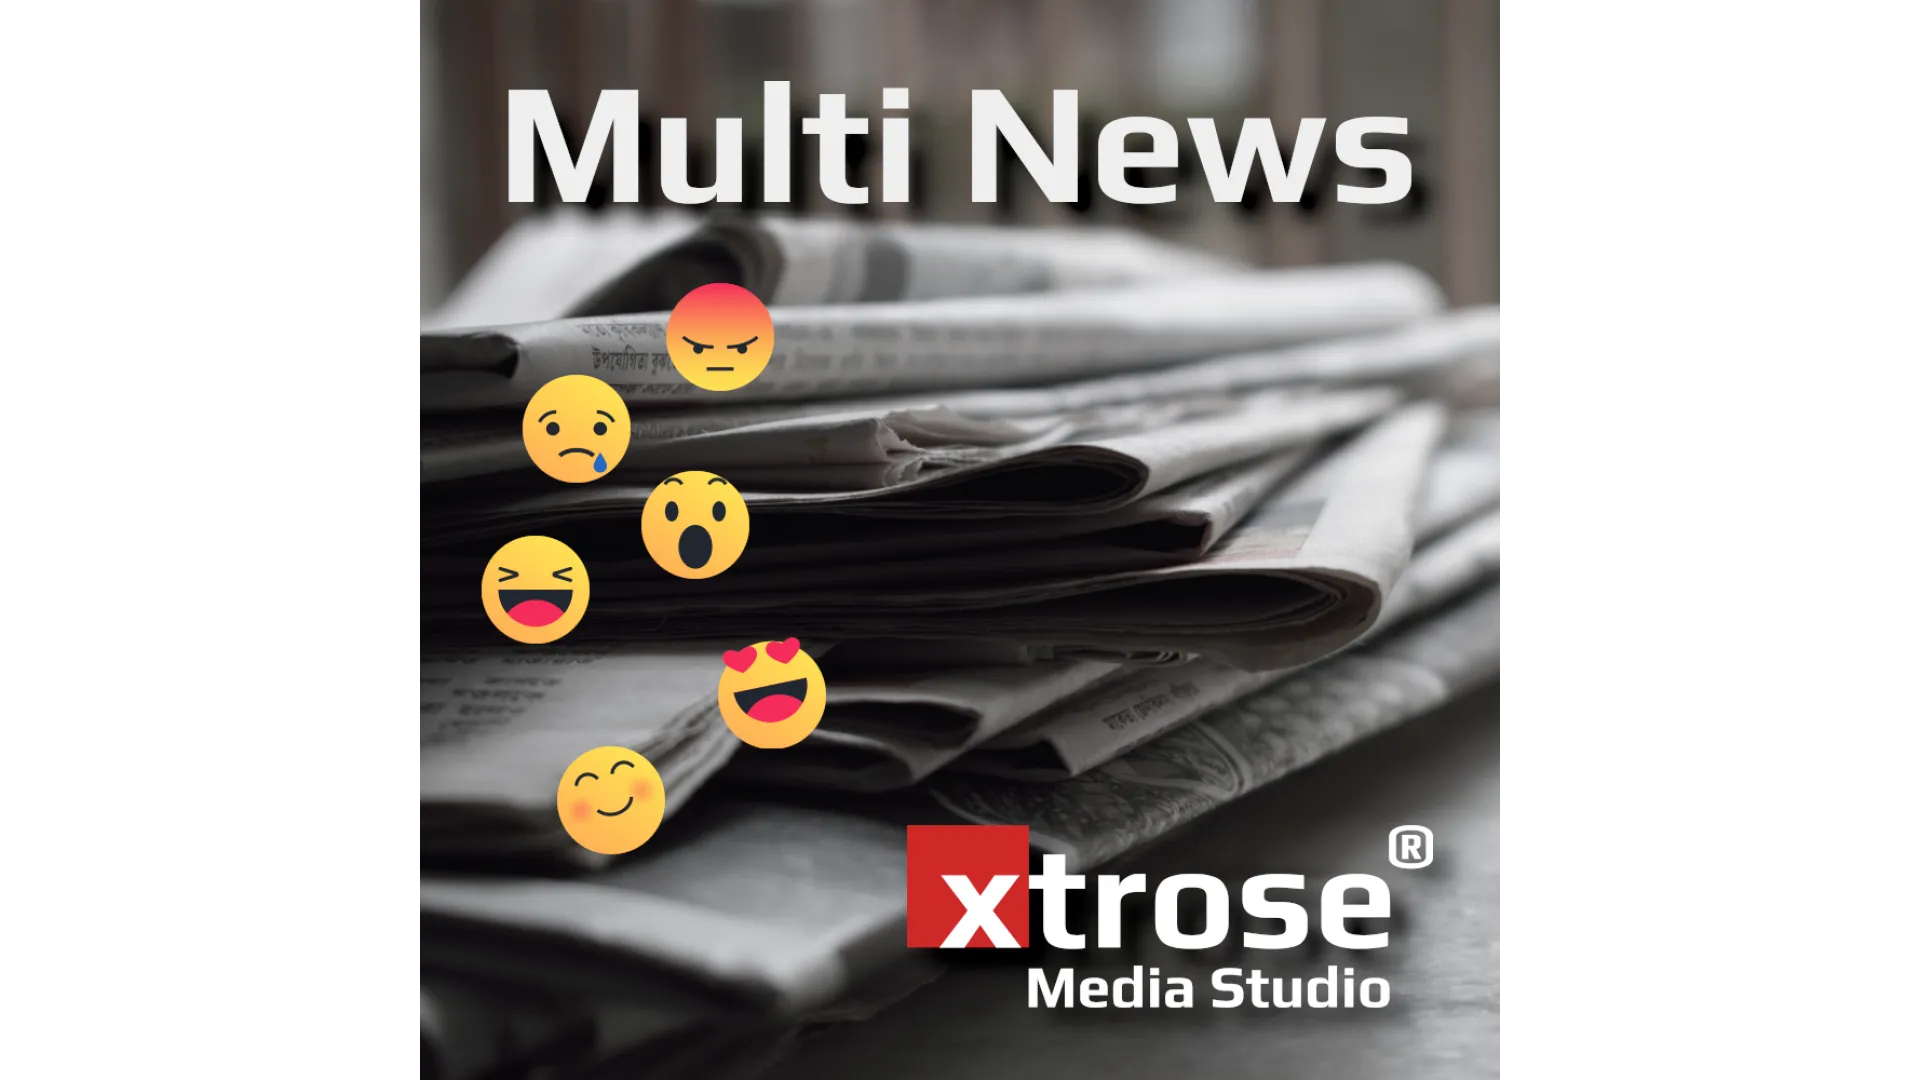 xtrose Multi News